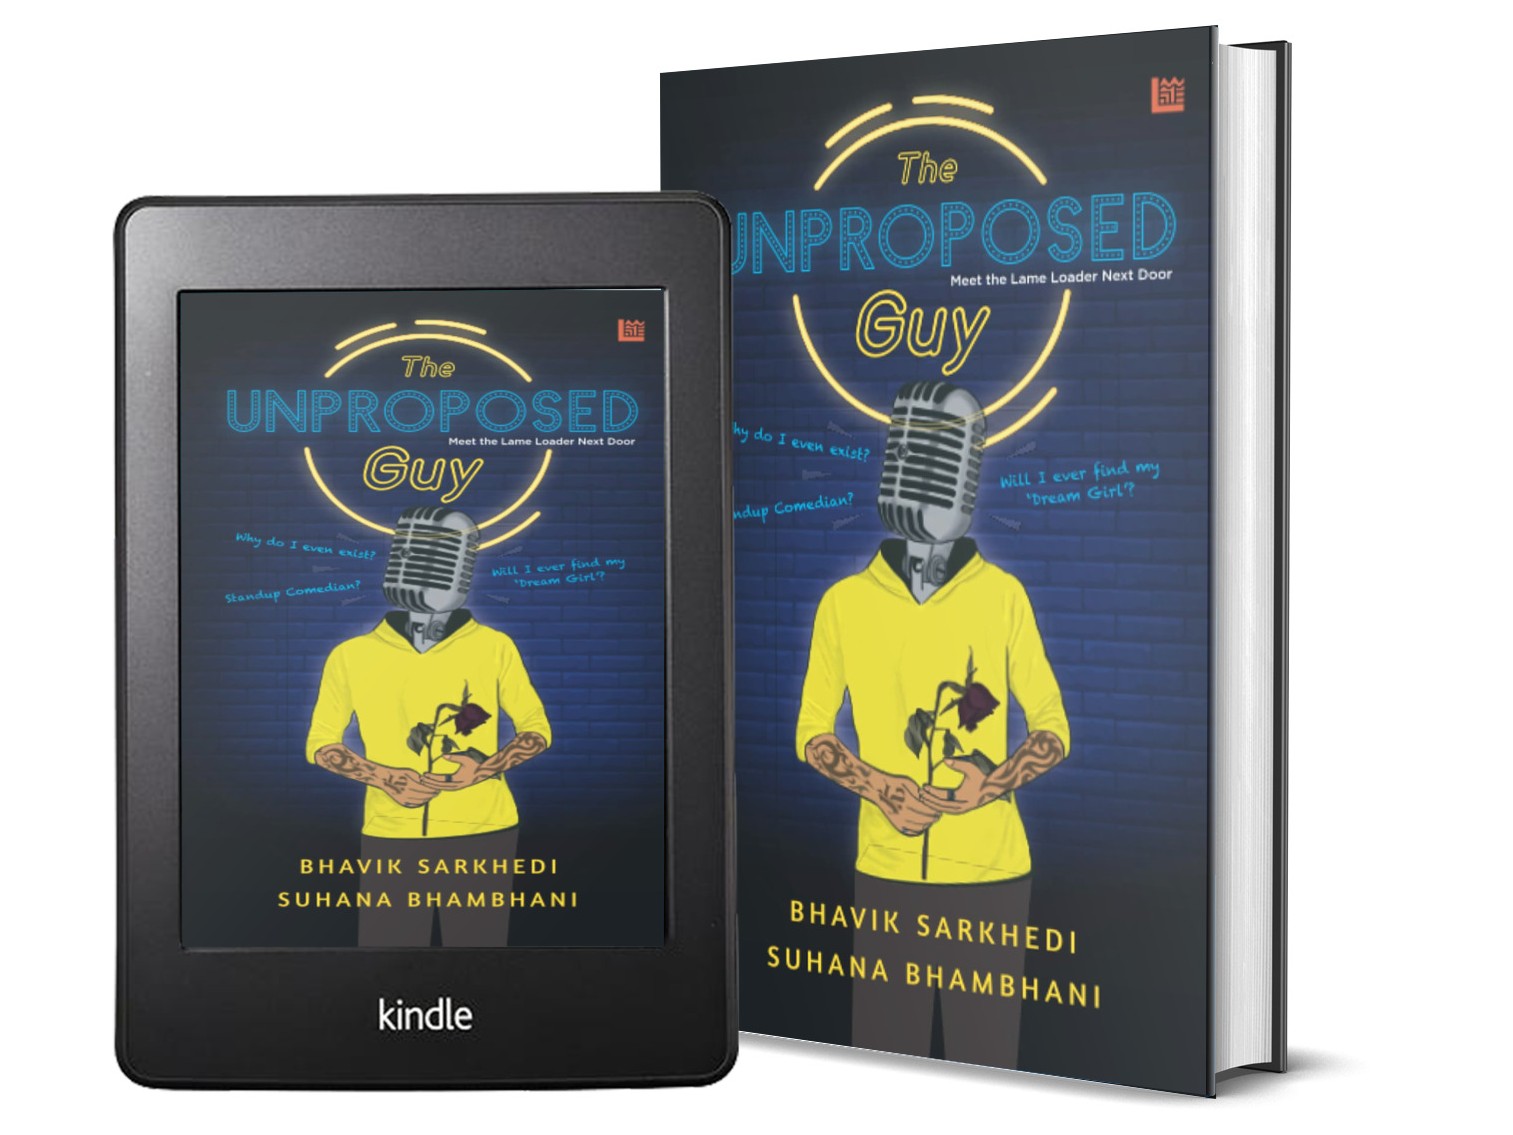 The Unproposed Guy By Bhavik Sarkhedi And Suhana Bhambhani | Book Cover